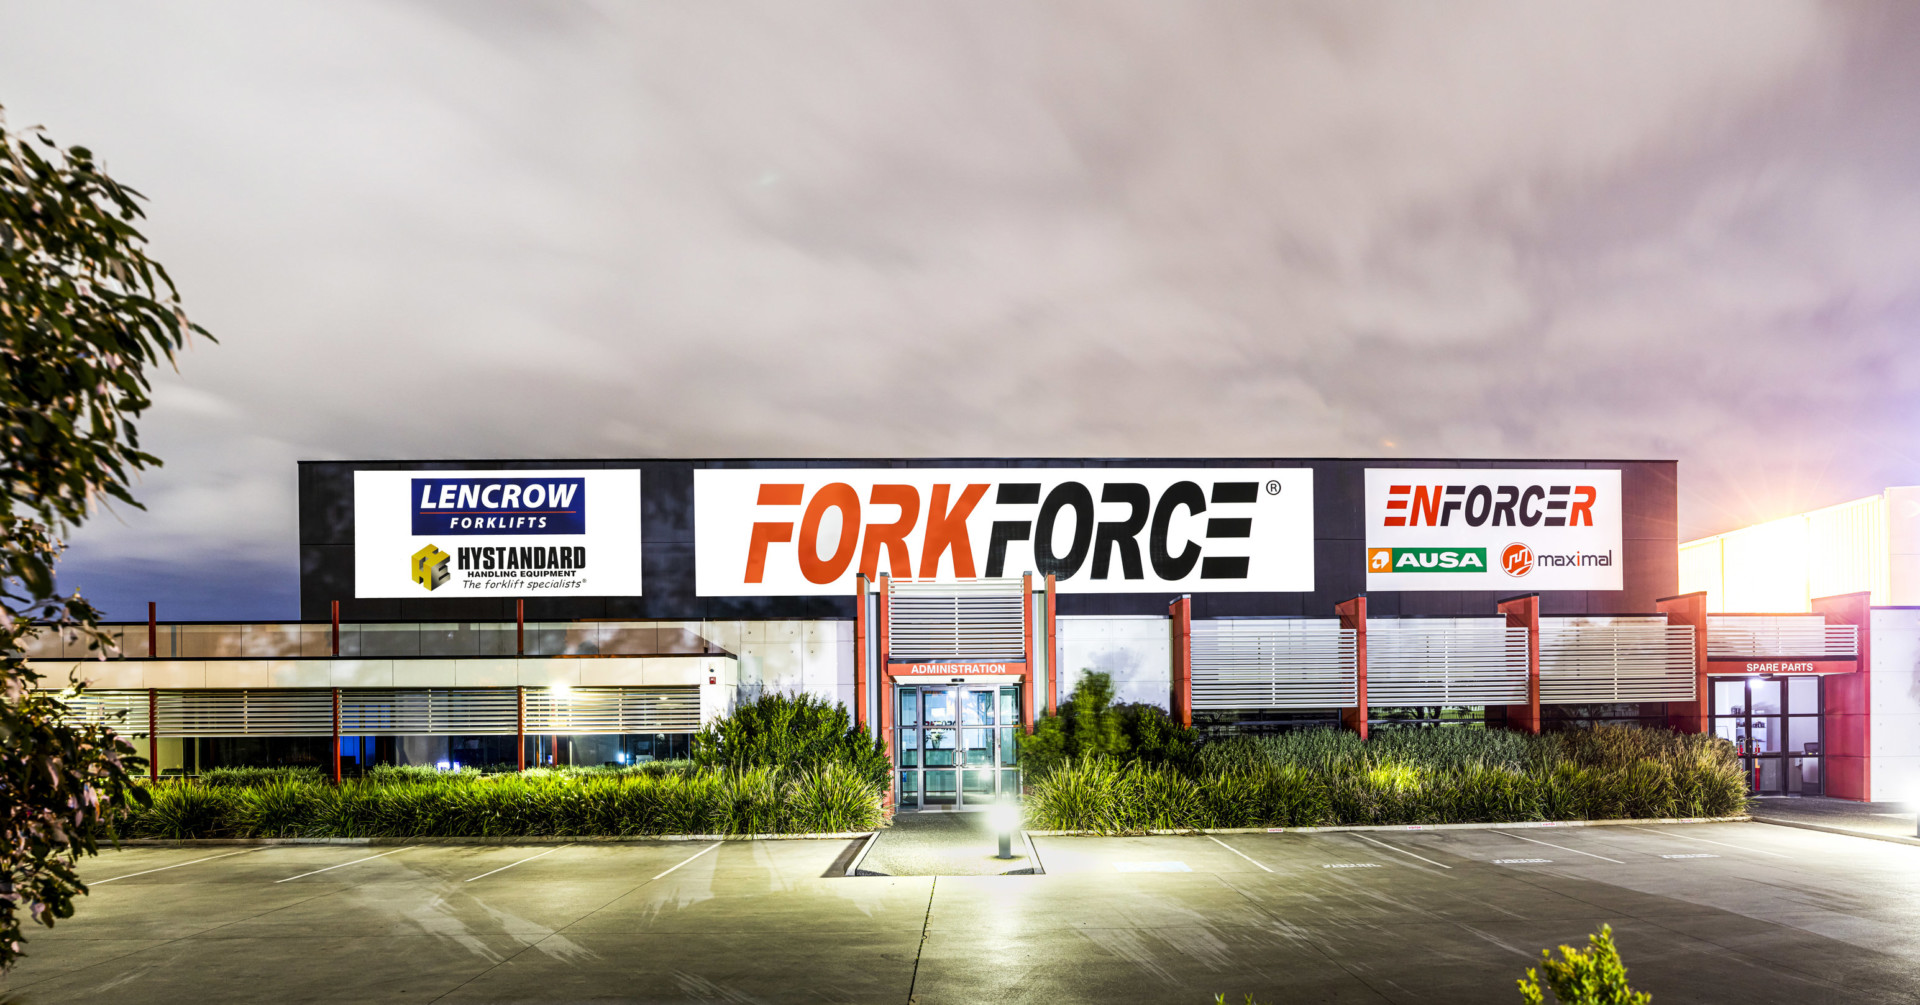 Fork Force Melbourne Office location